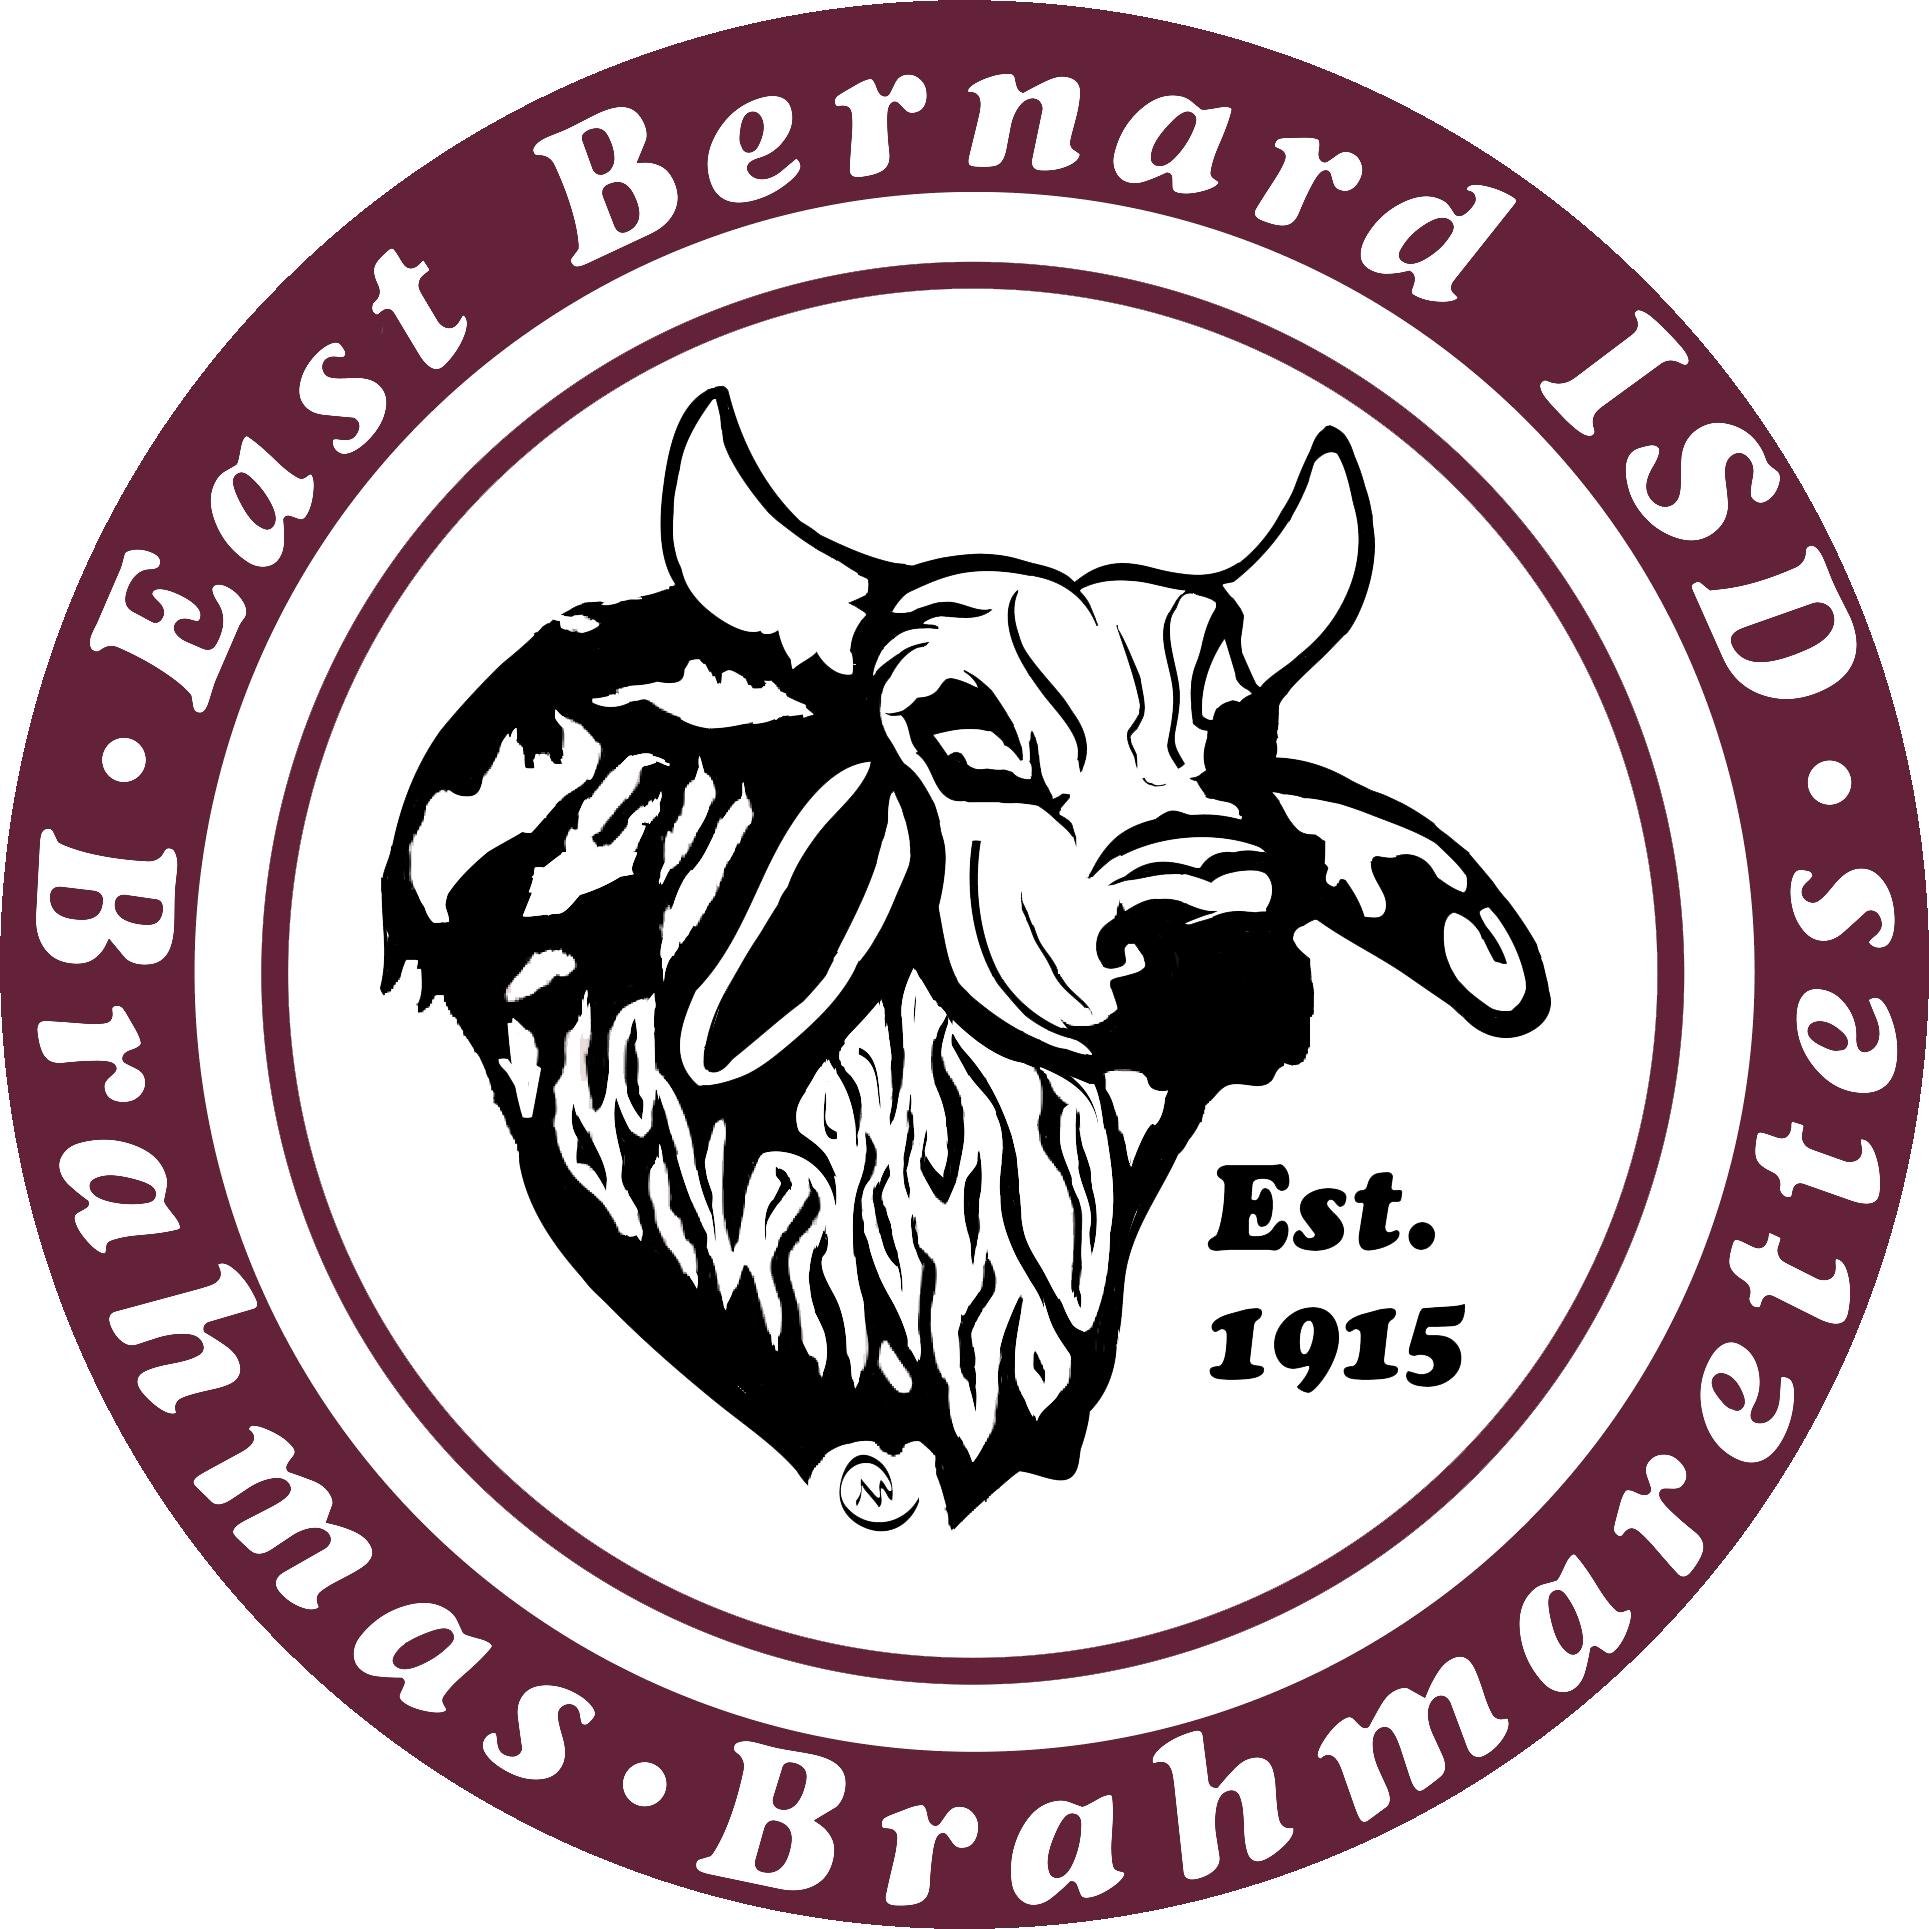 East Bernard ISD